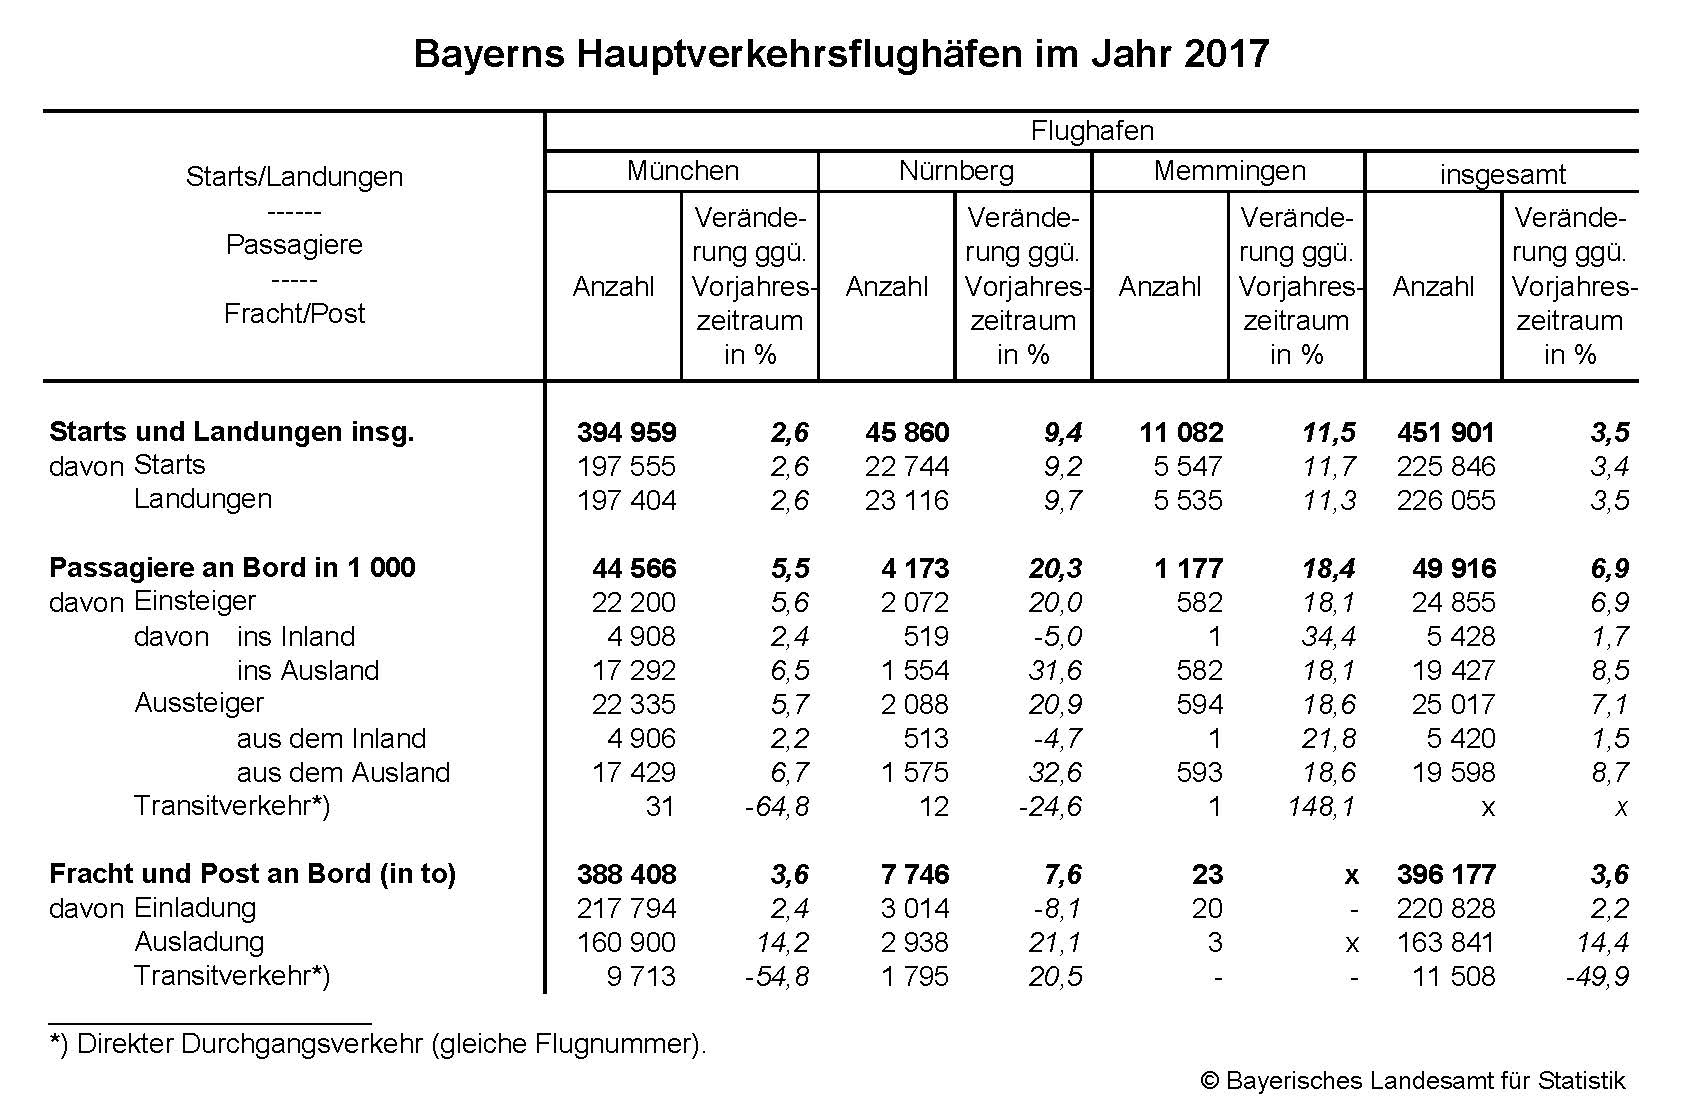 Bayerns Hauptverkehrsflughäfen im Jahr 2017